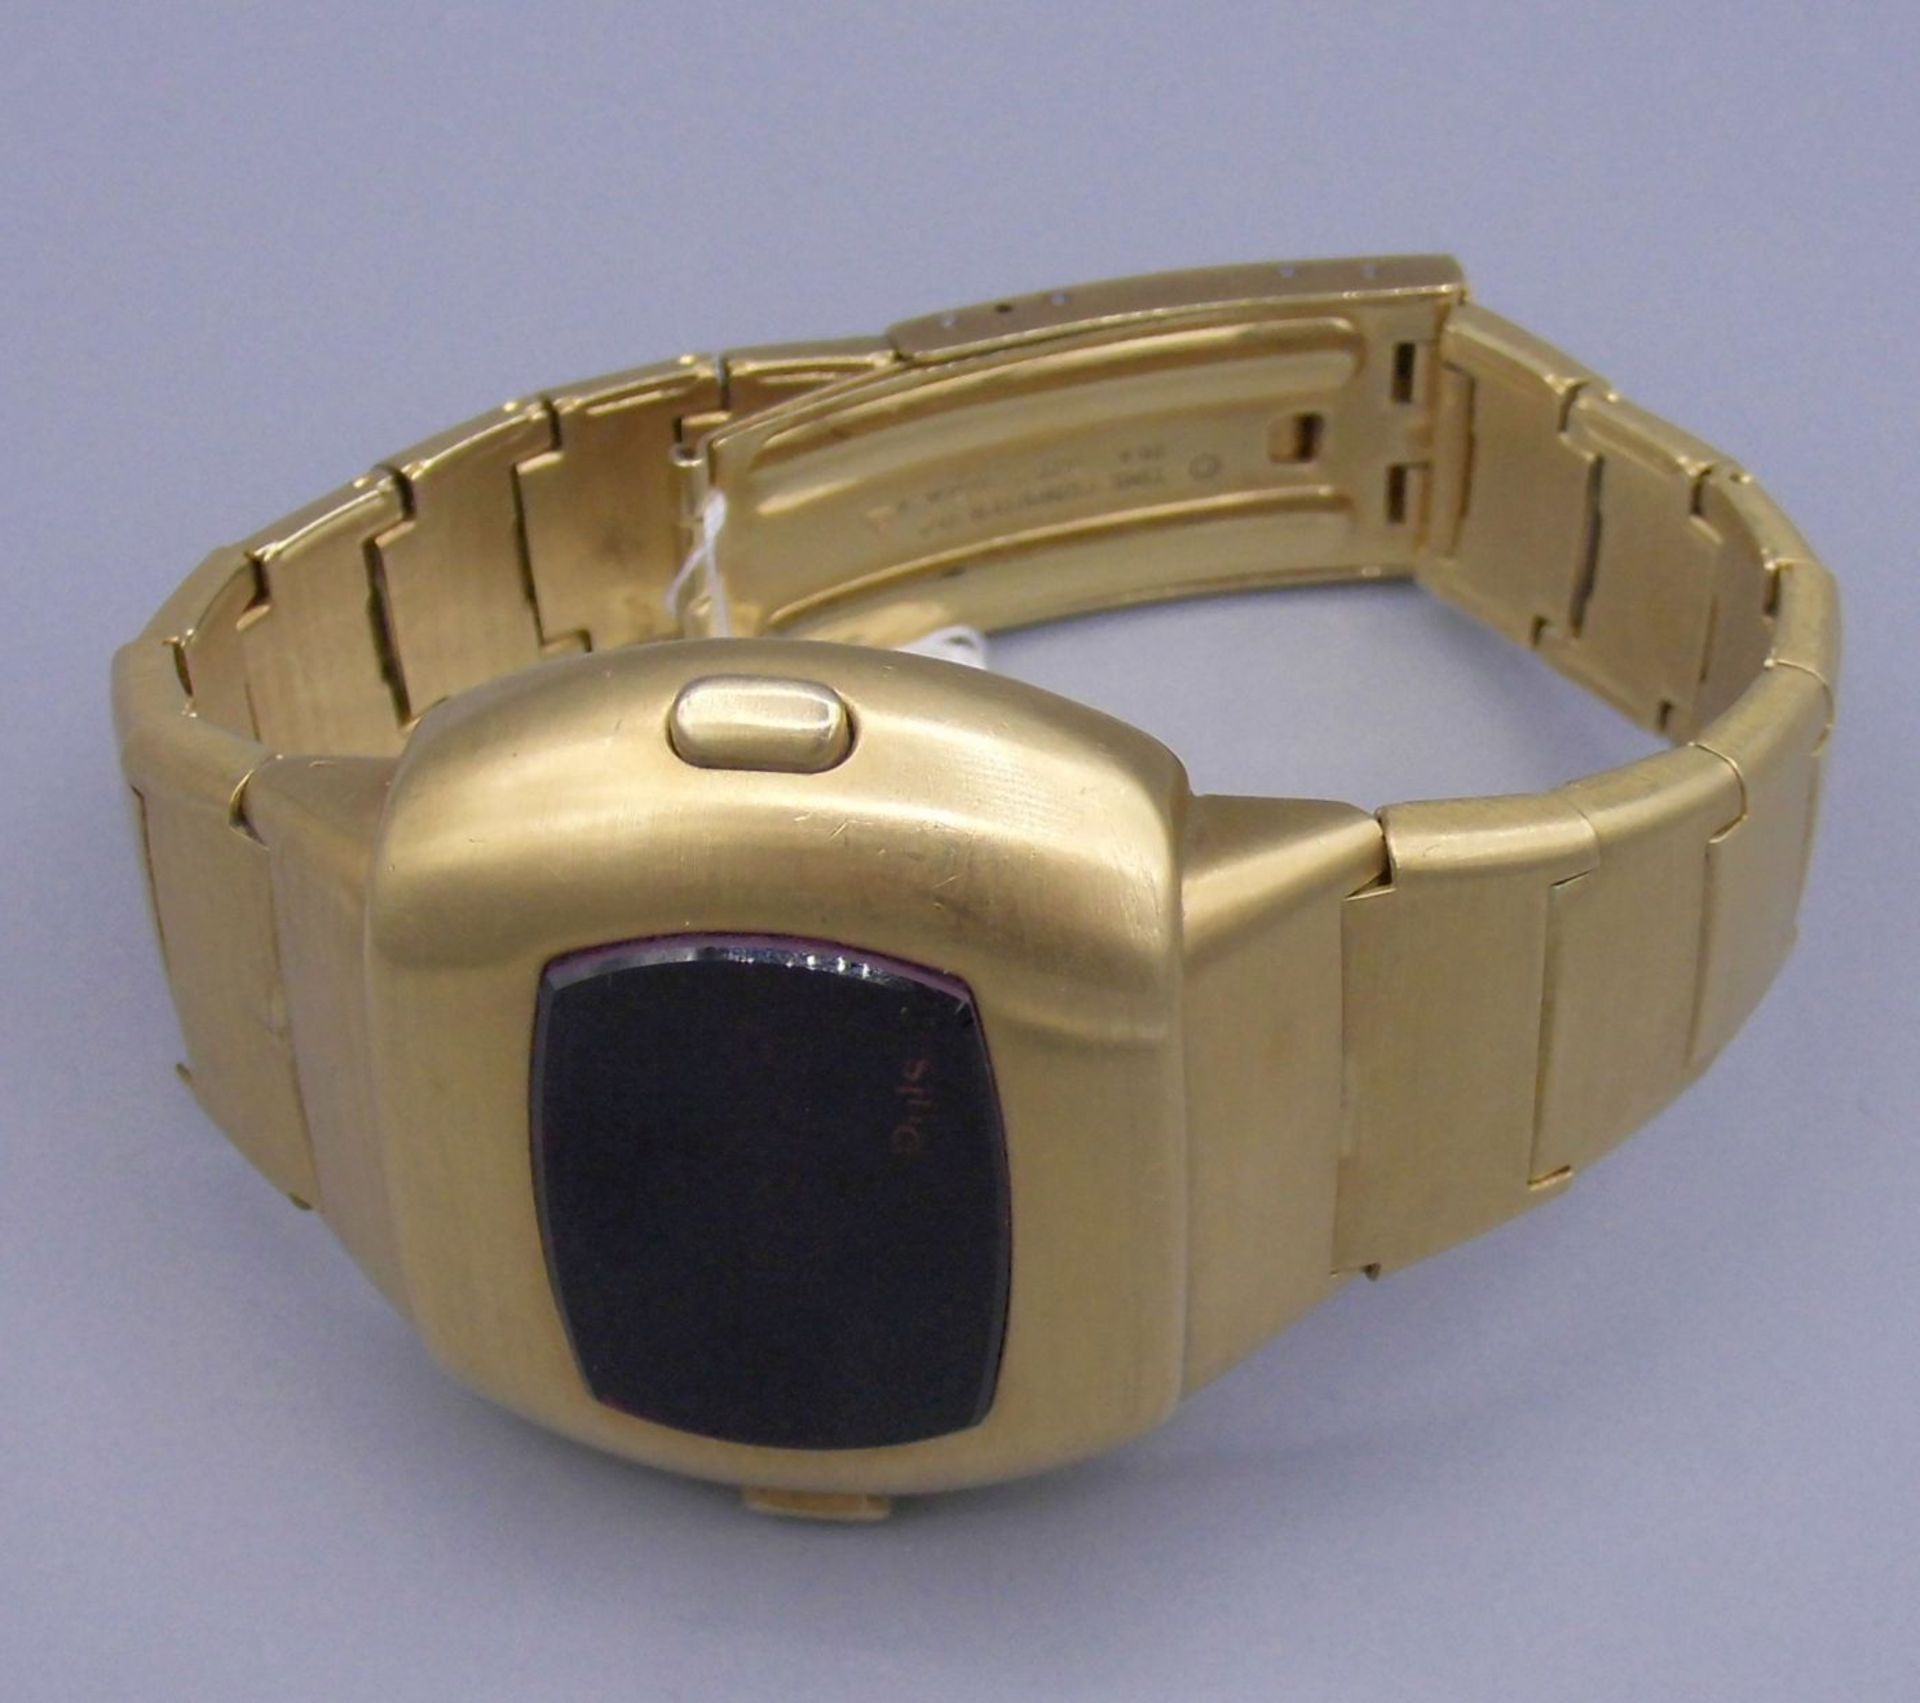 GOLDENE ARMBANDUHR / DIGITALUHR : Pulsar P3 "Date Command" / digital watch, 1970er Jahre, Gehäuse - Bild 3 aus 7